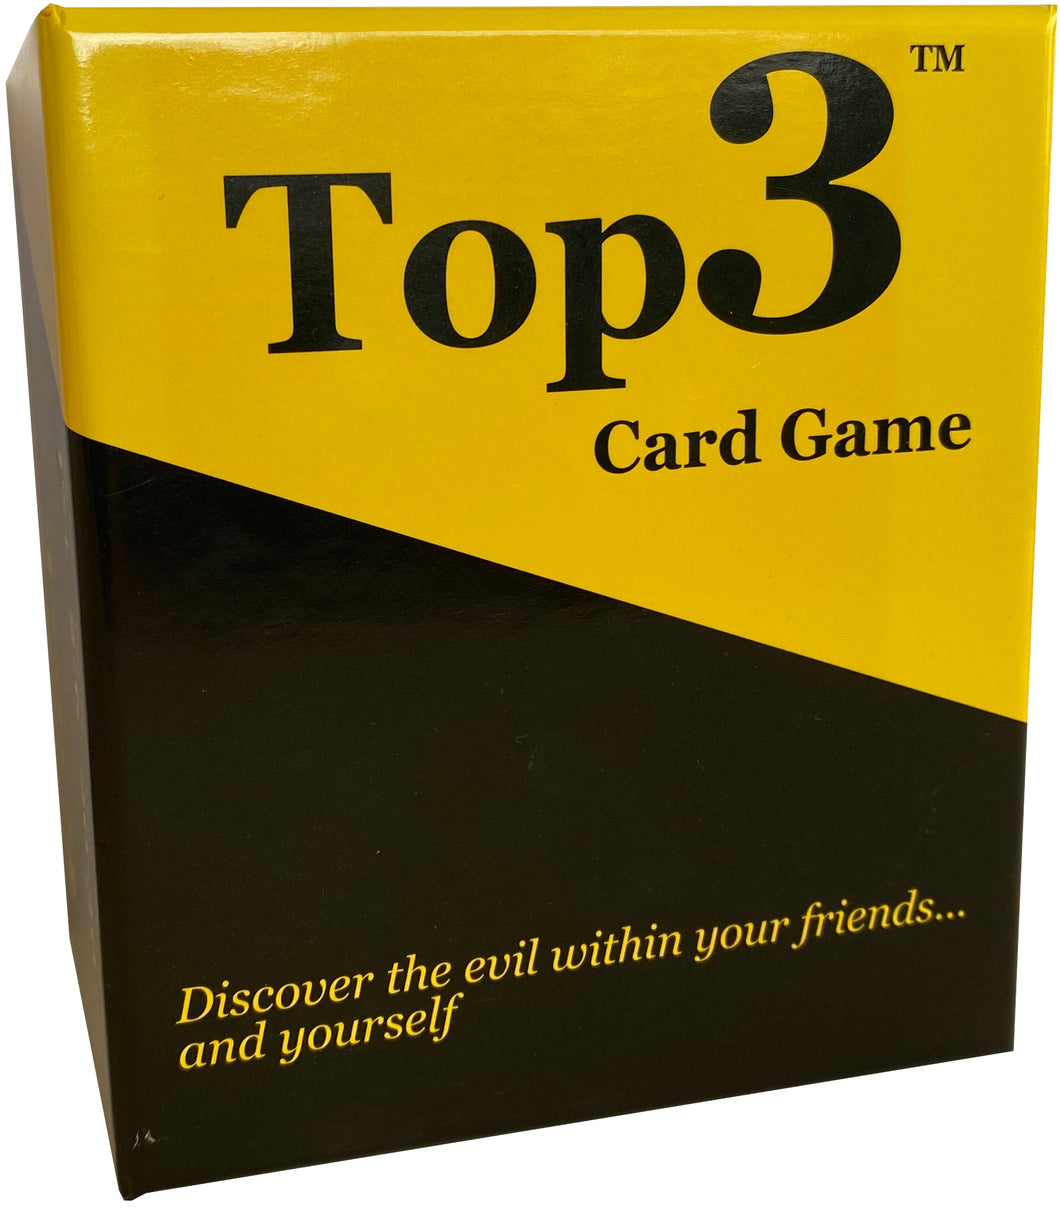 Top3 Card Game